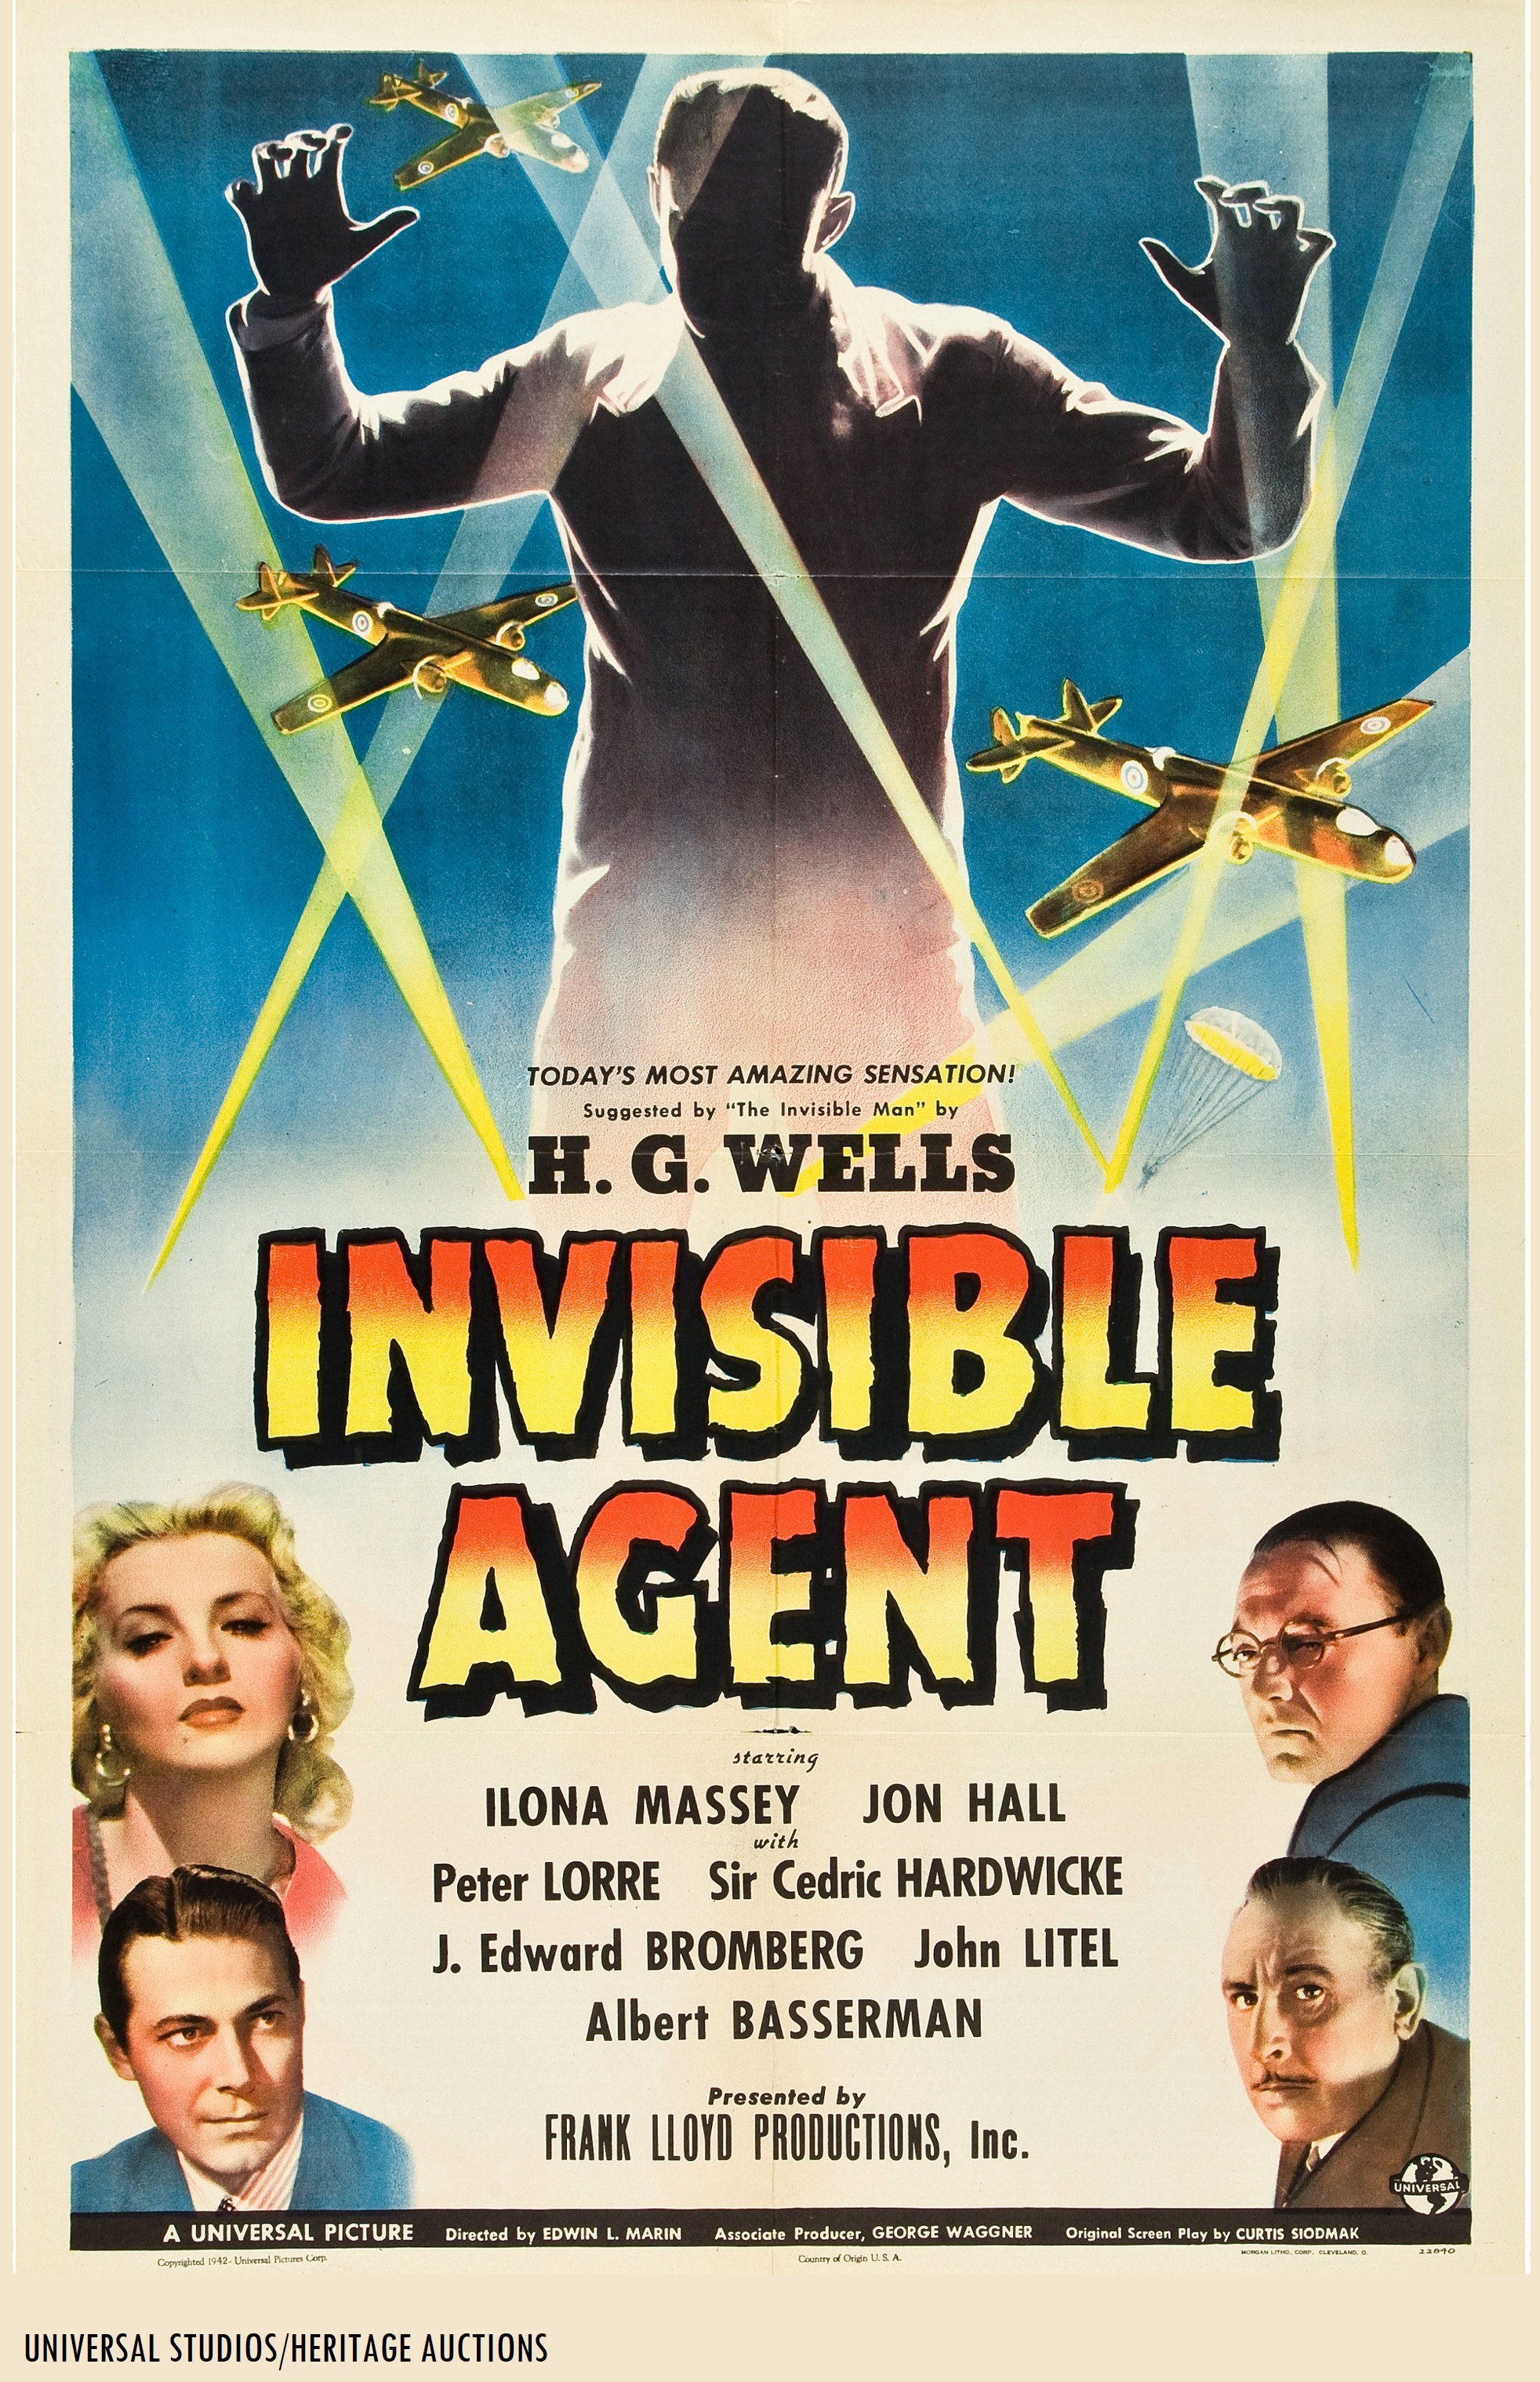 Orig_1942_Universal_Studios_Poster_Art_Invisible_Agent